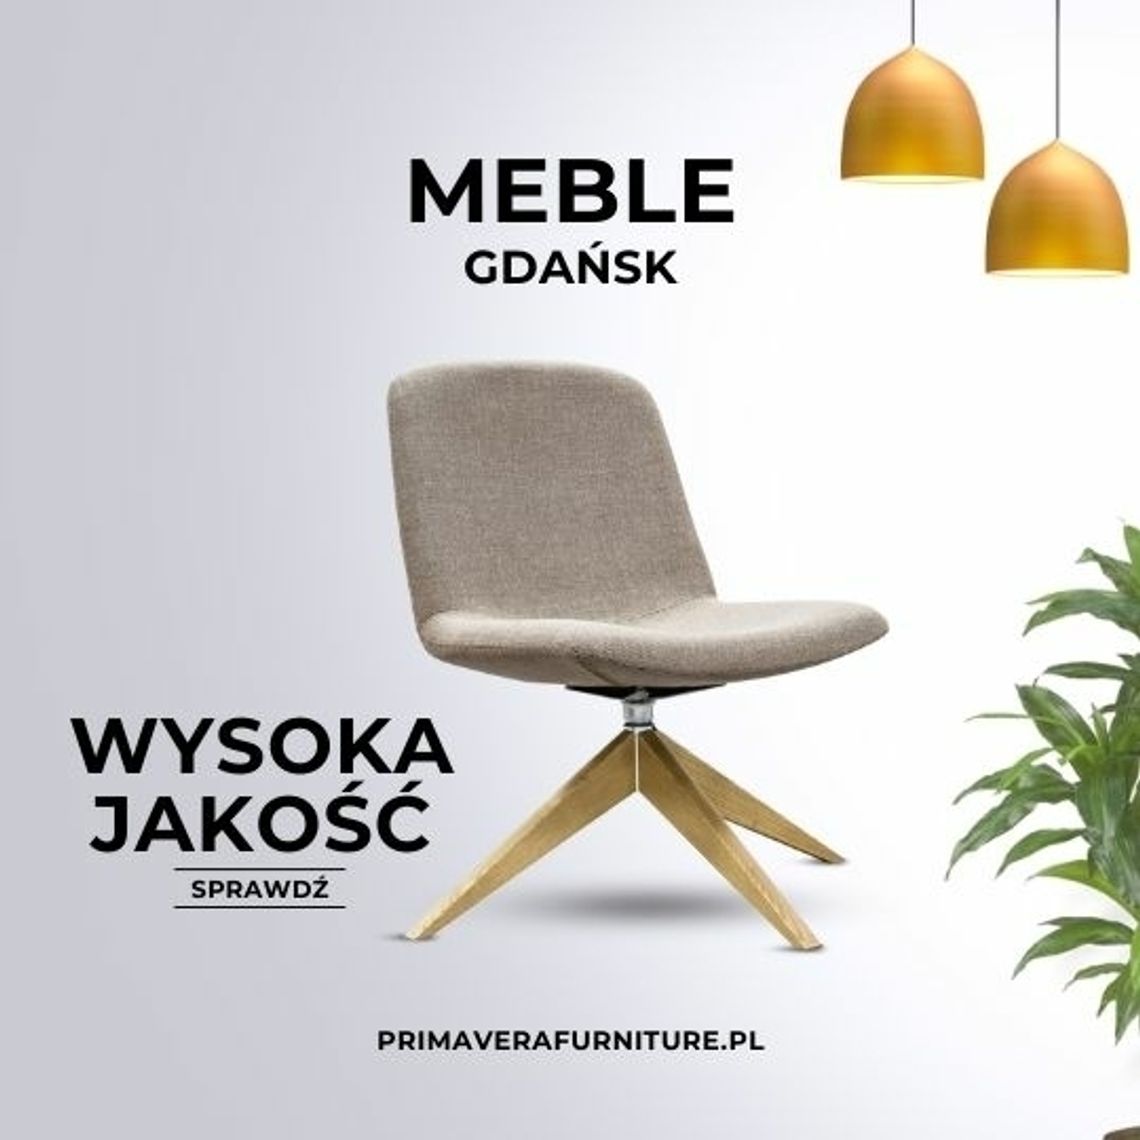 Salon Meblowy Primavera Furniture Gdańsk